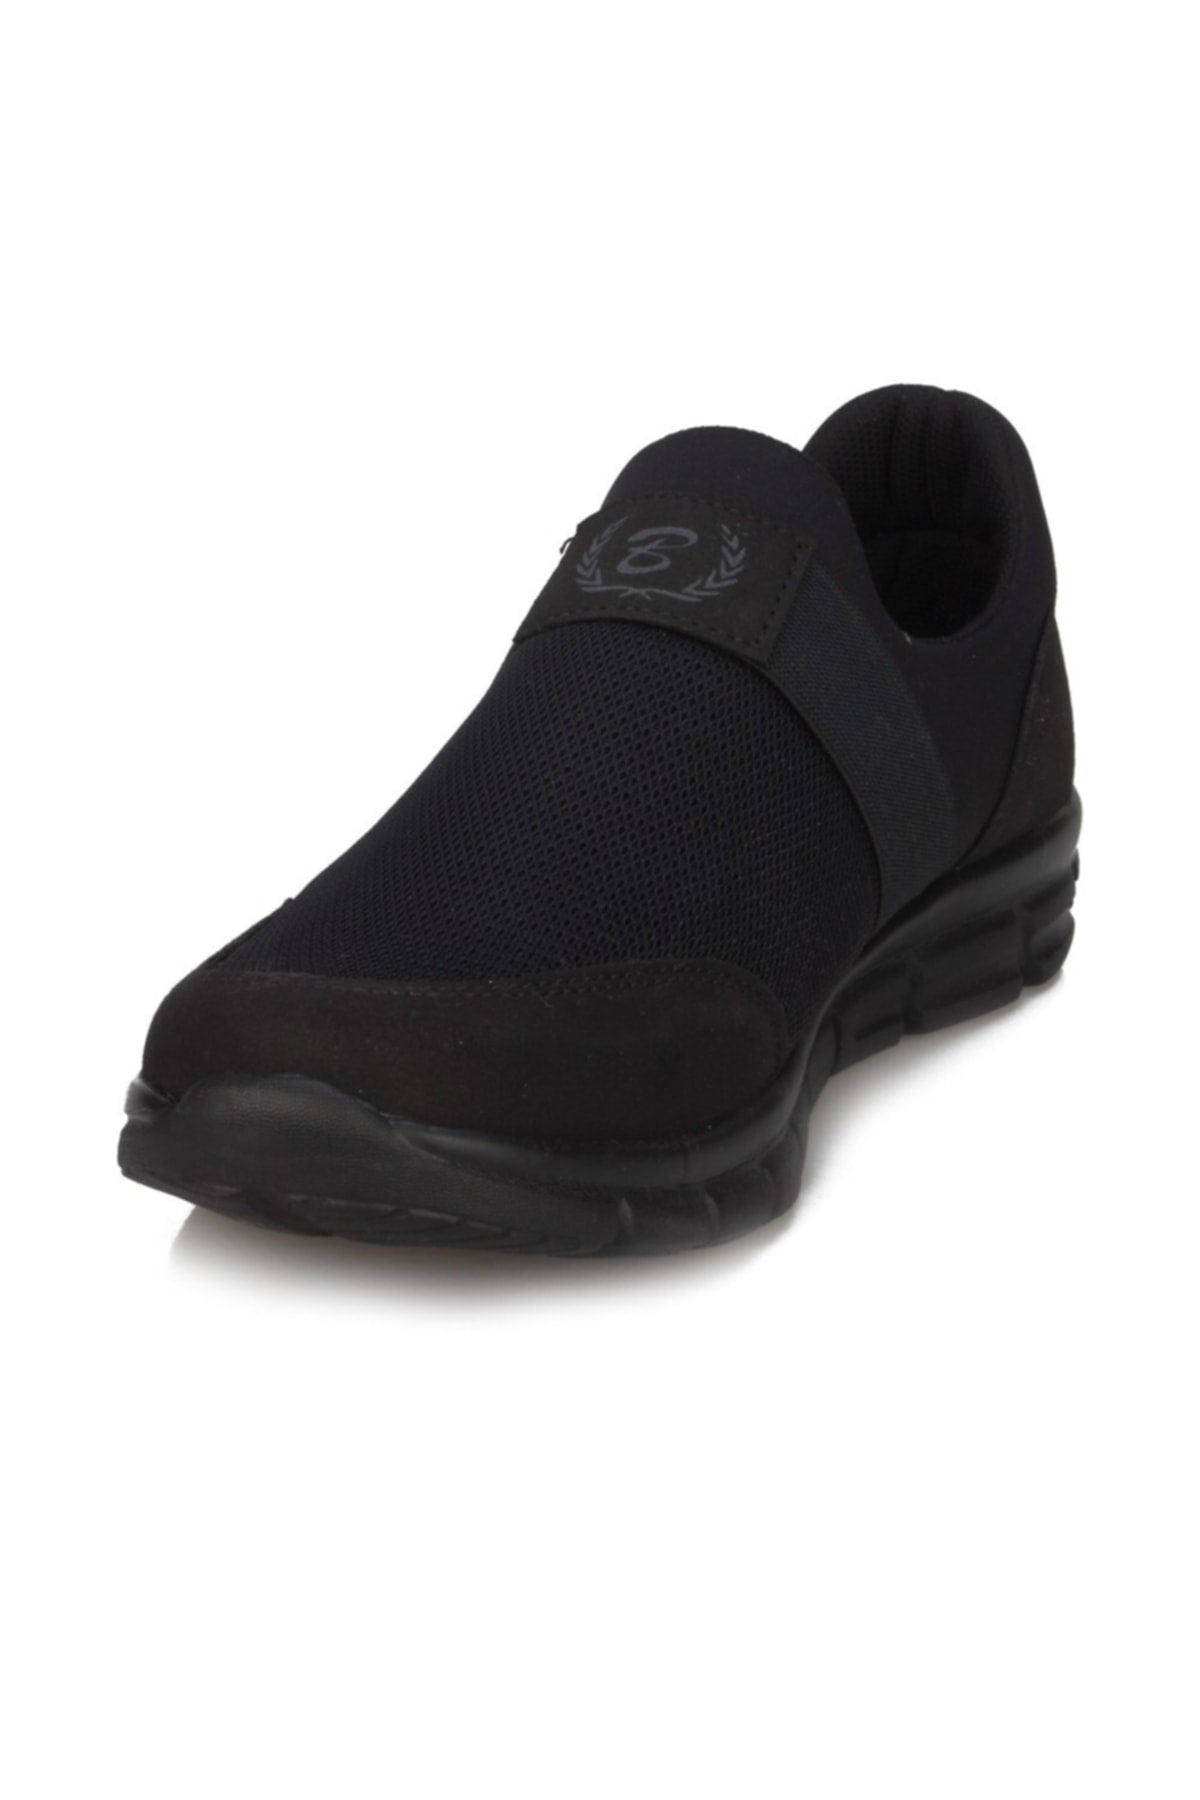 Black - Unisex Light Softening Soft Baseless Daily Hiking Sport Shoes